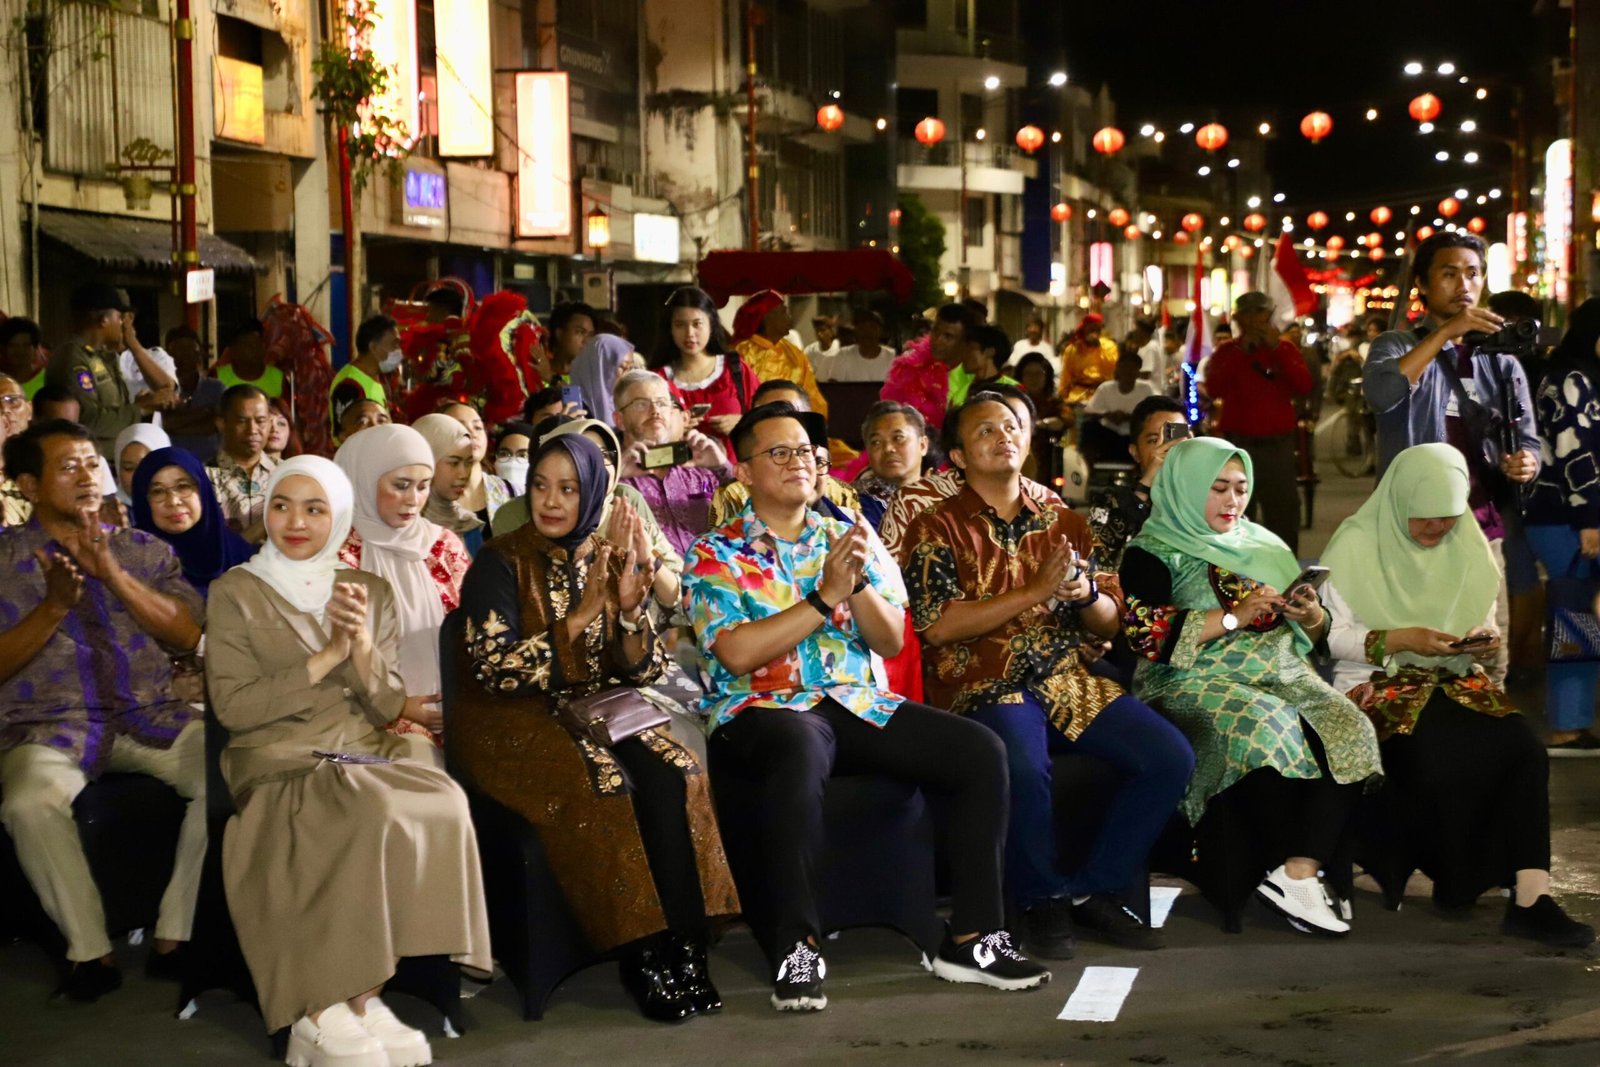 Kadin Surabaya: Kota Lama Bisa Jadi Penggerak Ekonomi dan Pariwisata Warga Surabaya